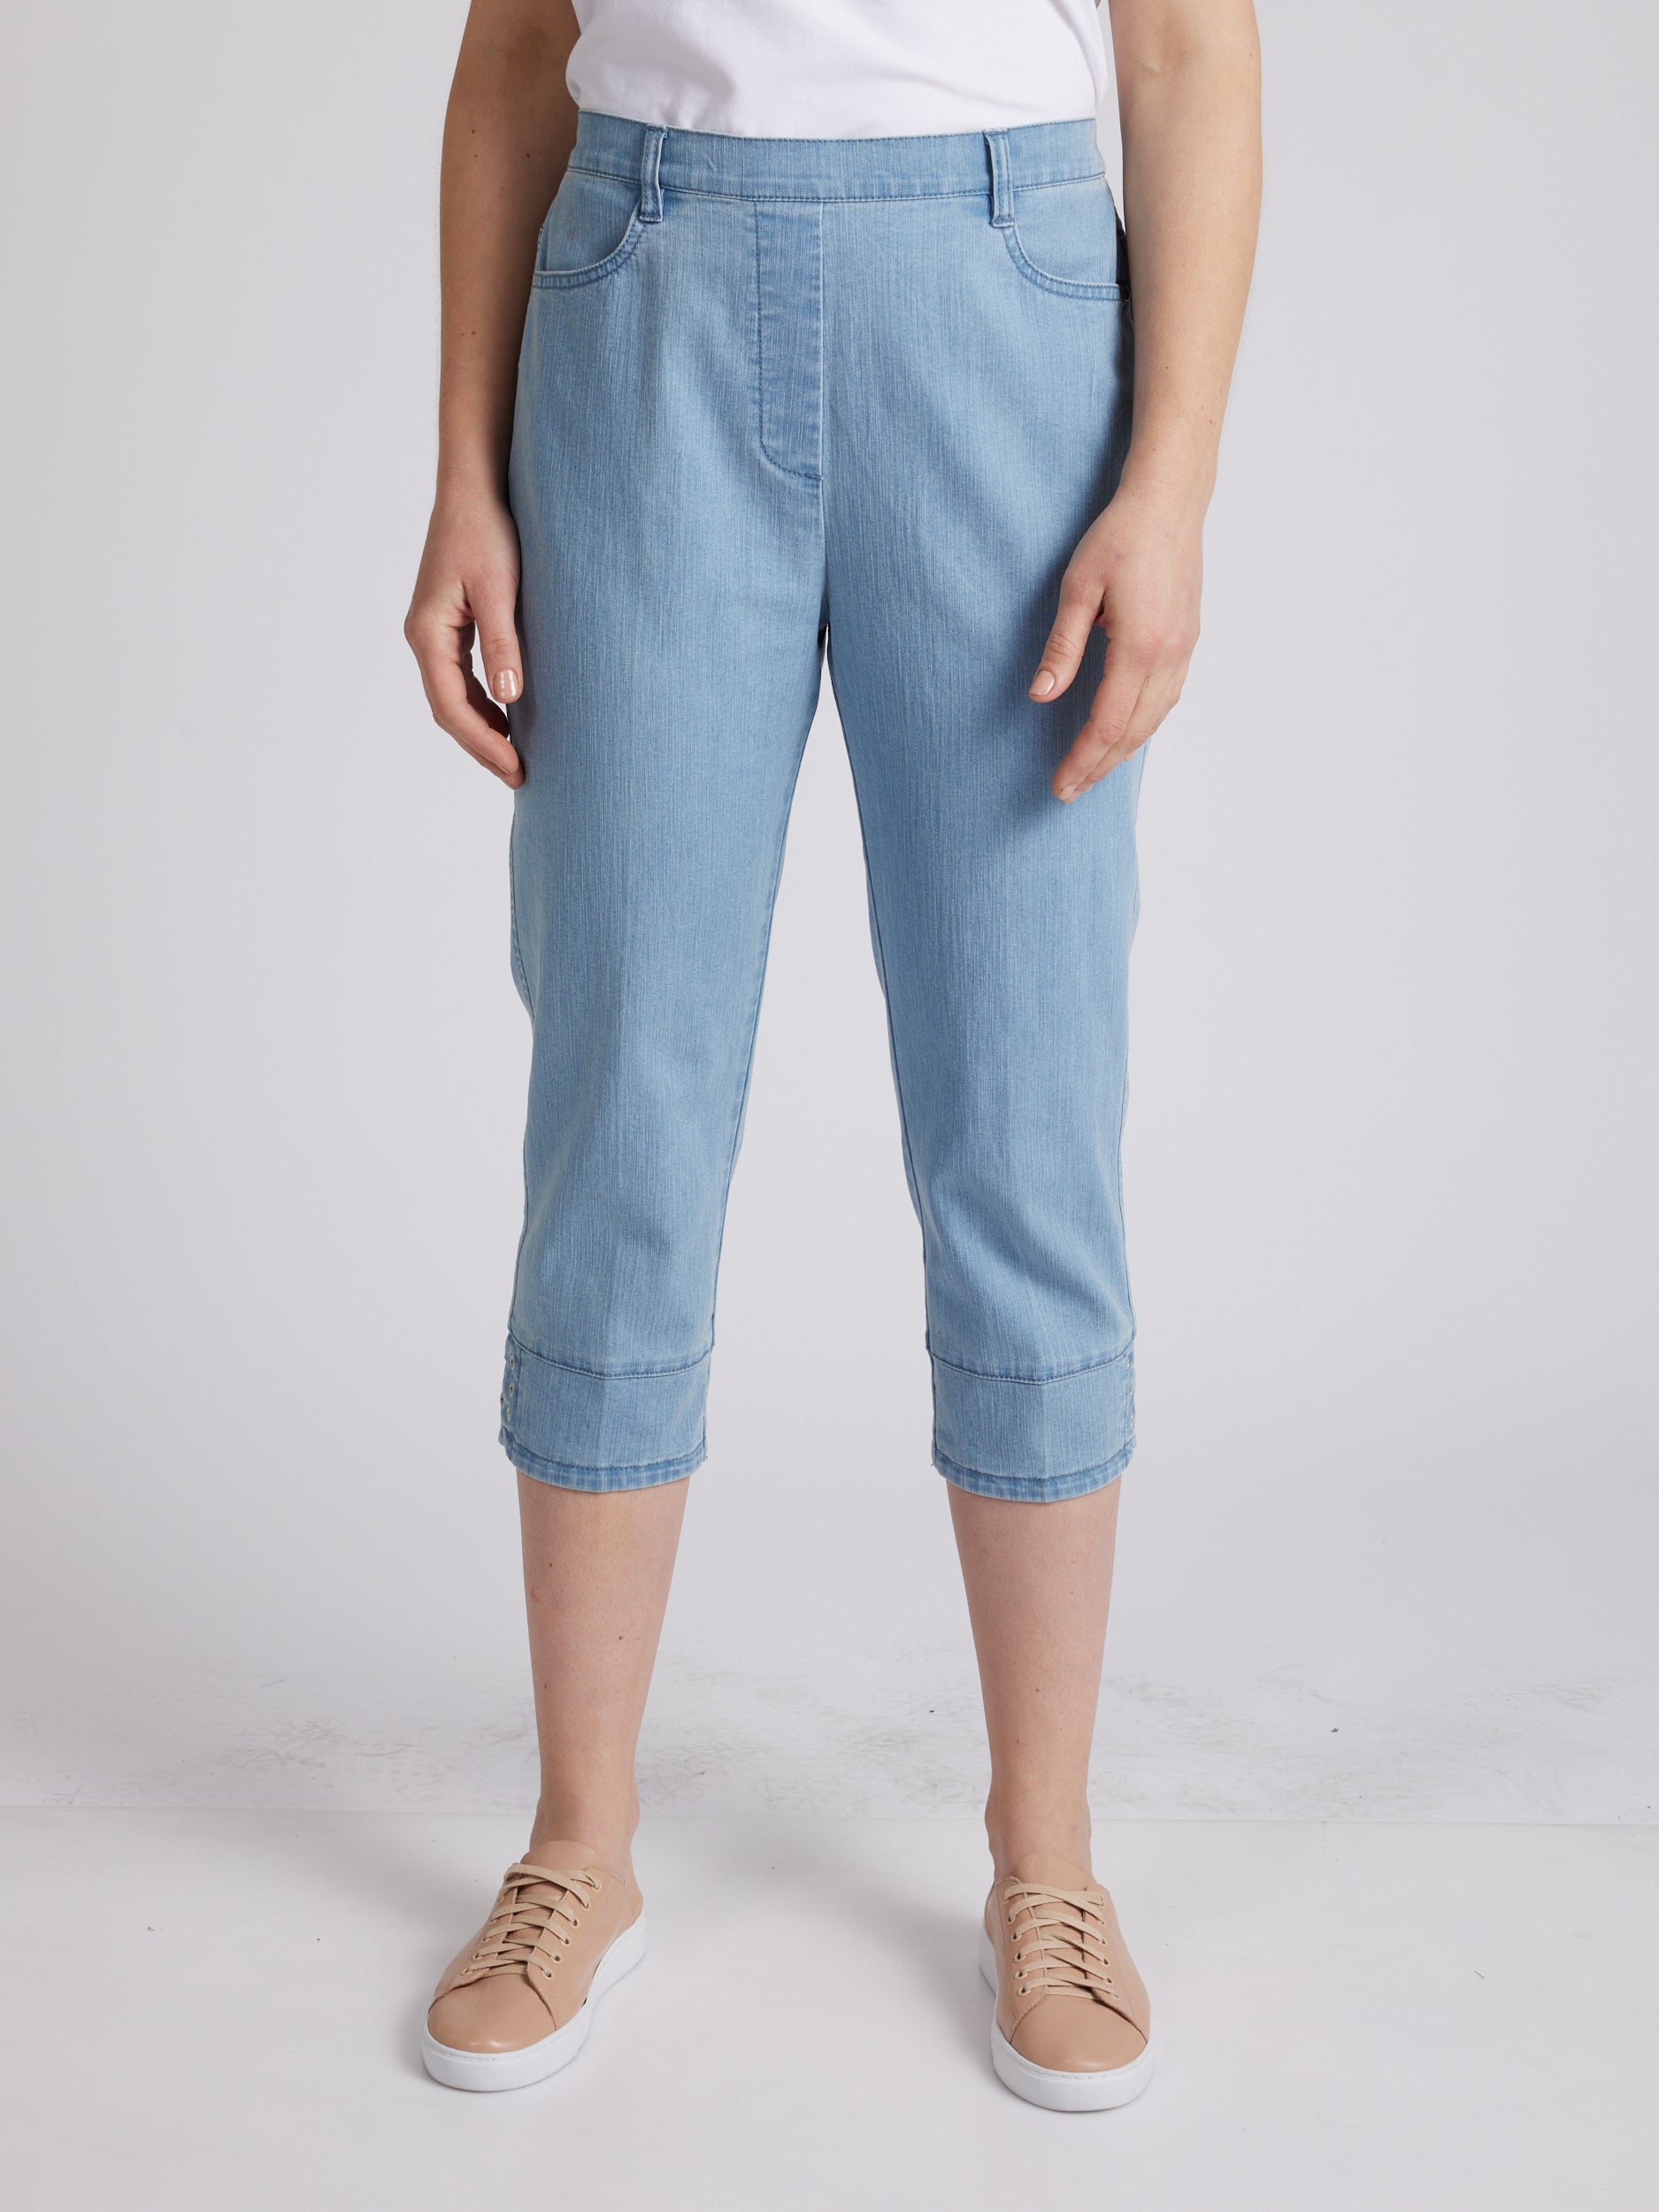 Rag & Bone Jean Zara Womens Denim Short Shorts Blue Size 25 26 4 Lot 3 -  Shop Linda's Stuff